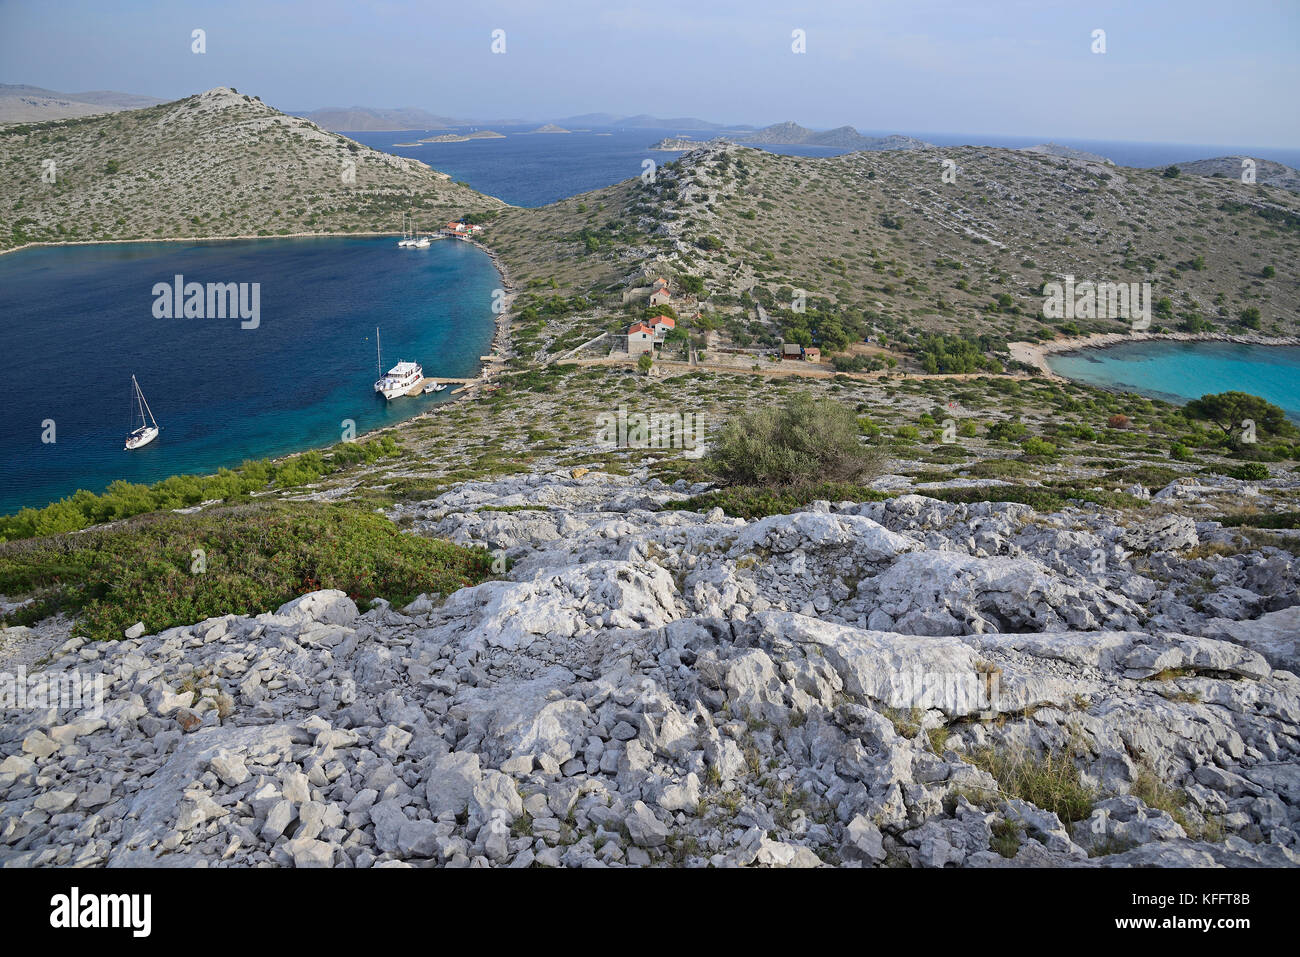 Natural harbor on the uninhabited Island Lebrnaka,Nationalpark Kornati Islands, Adriatic Sea, Mediterranean Sea, Dalmatia, Croatia Stock Photo